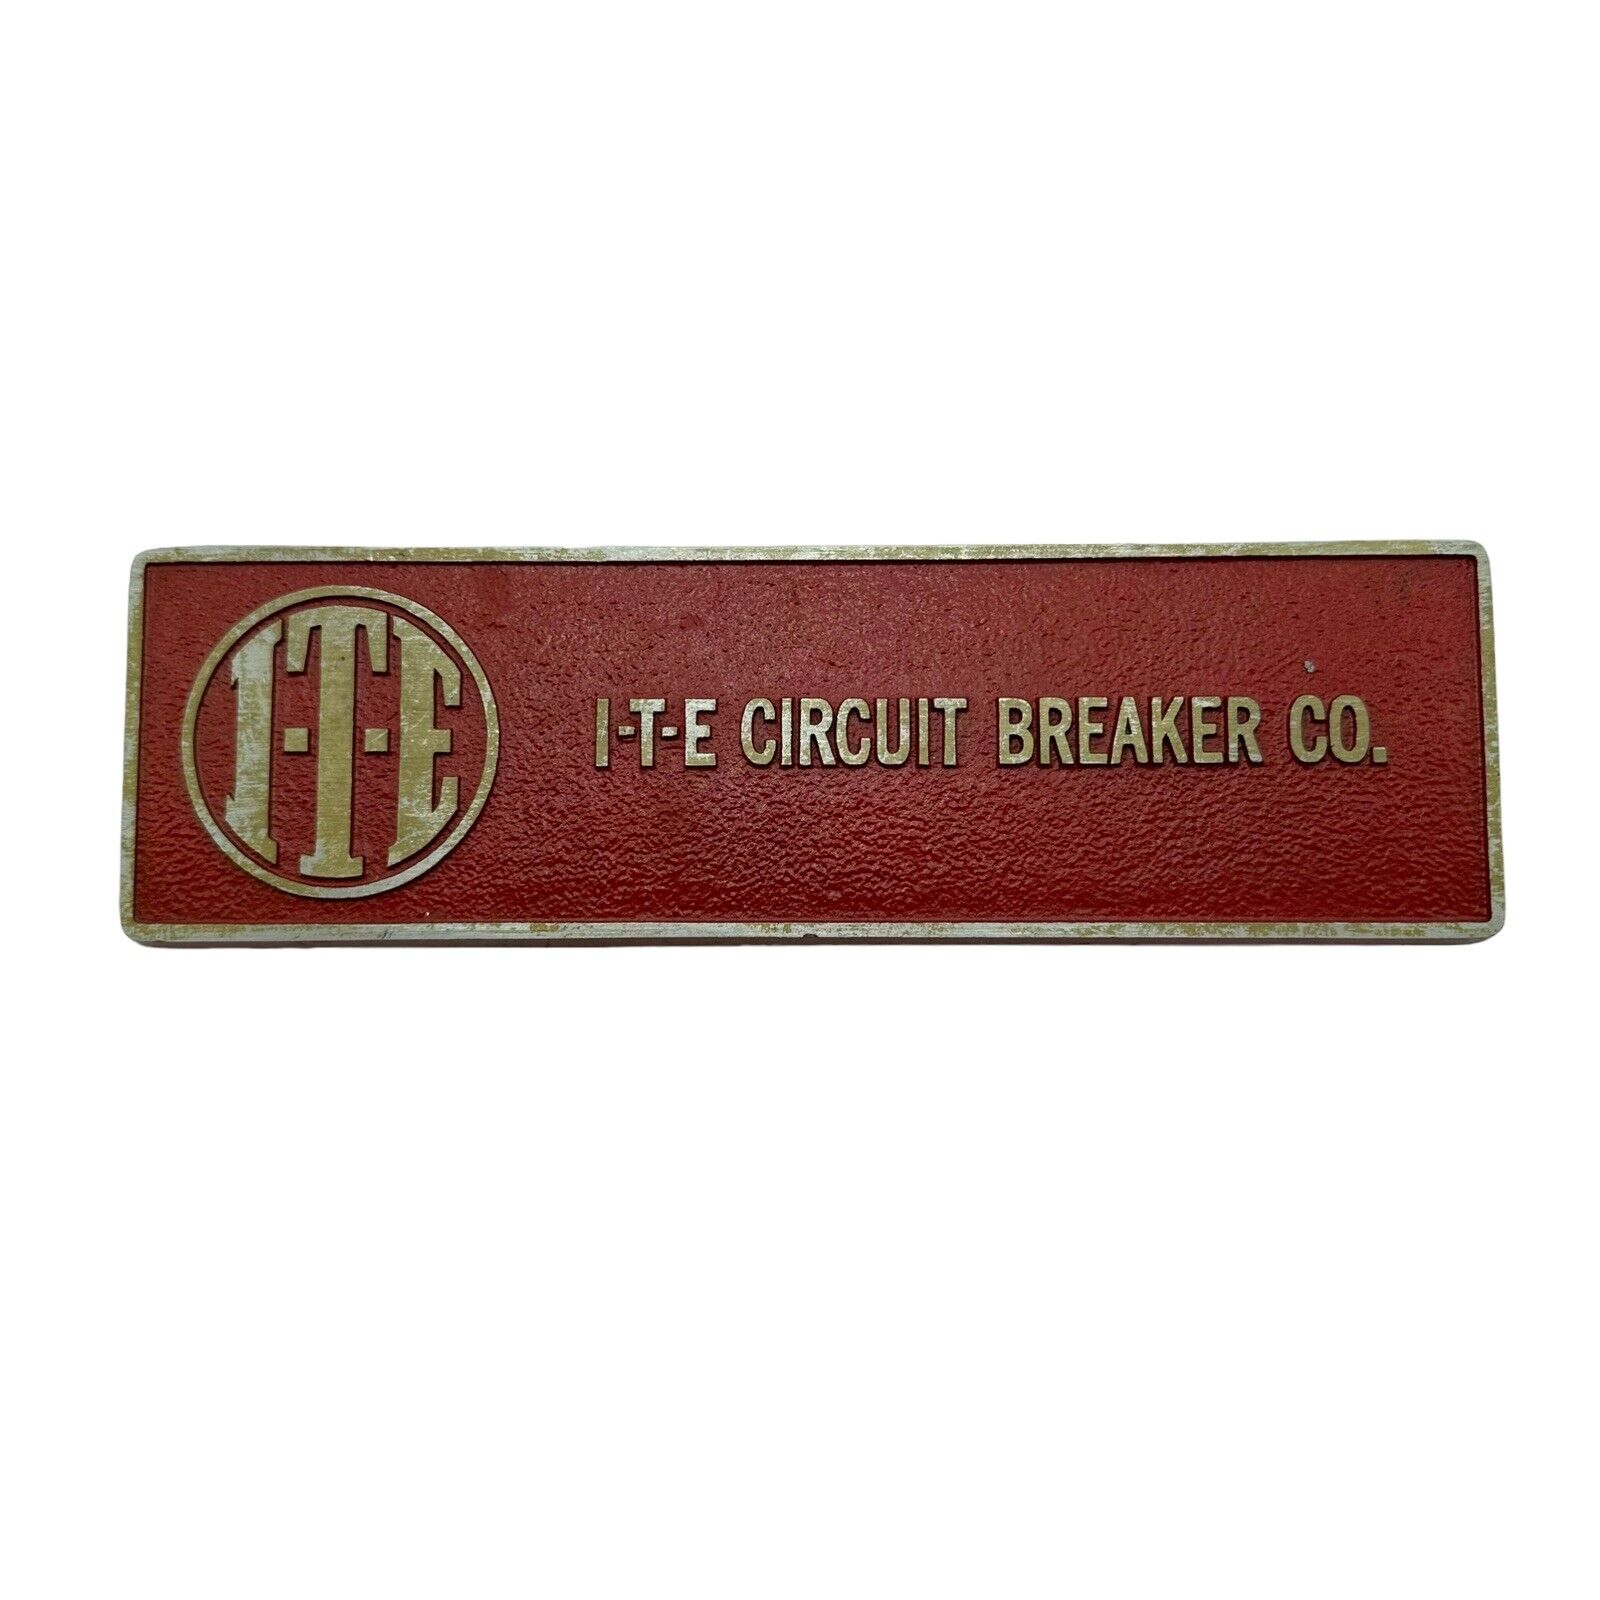 Vintage I-T-E Circuit Breaker Company Metal Plaque 